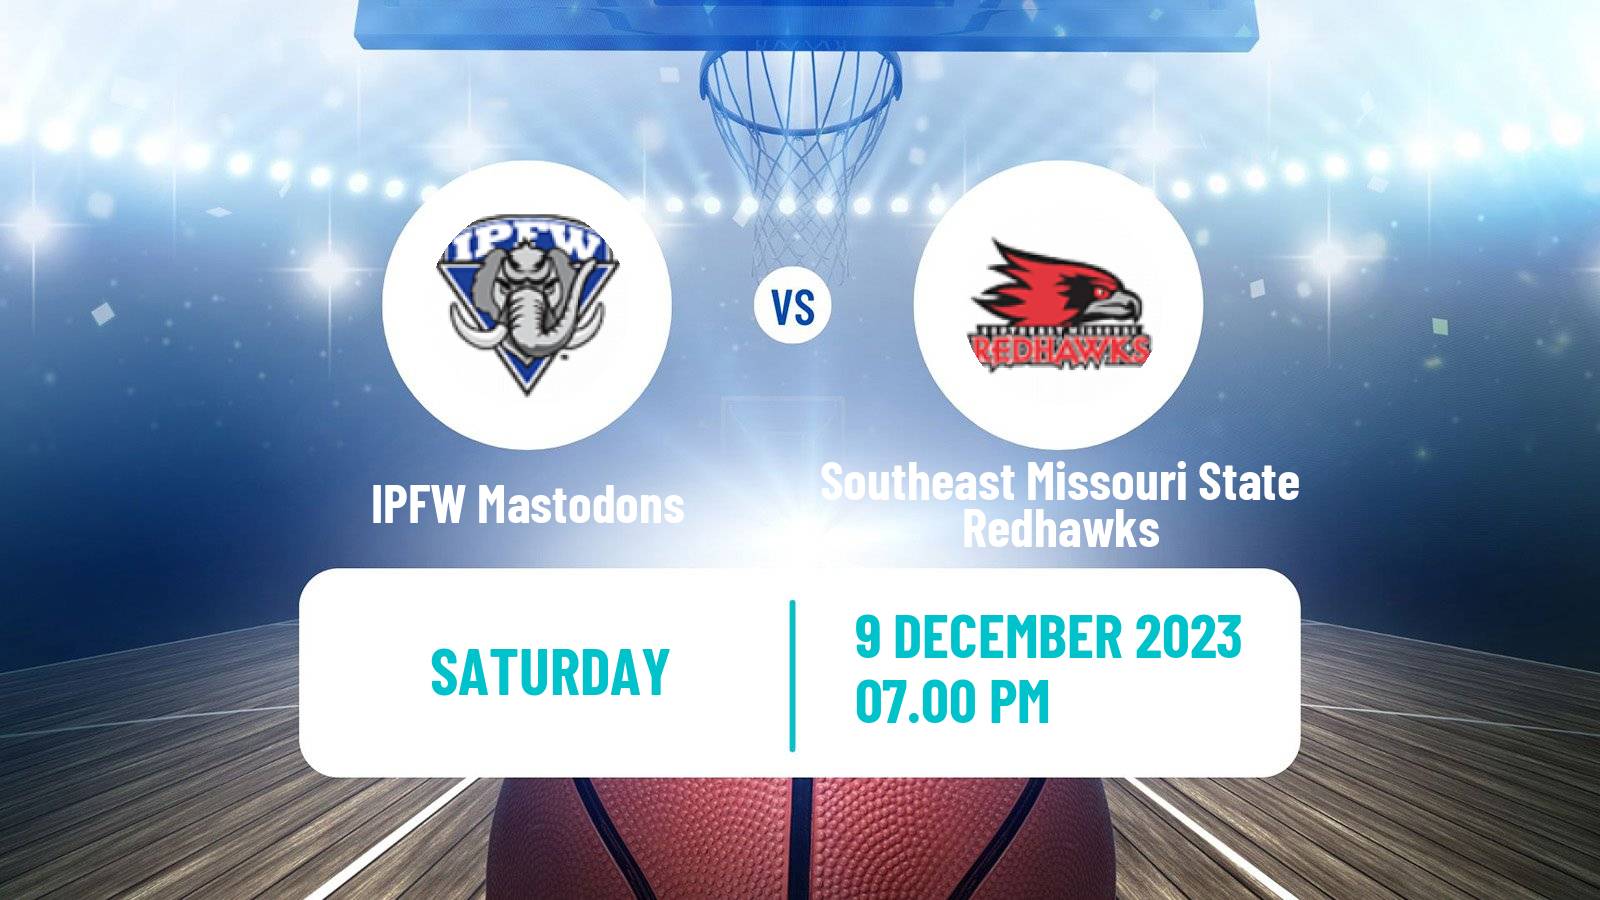 Basketball NCAA College Basketball IPFW Mastodons - Southeast Missouri State Redhawks